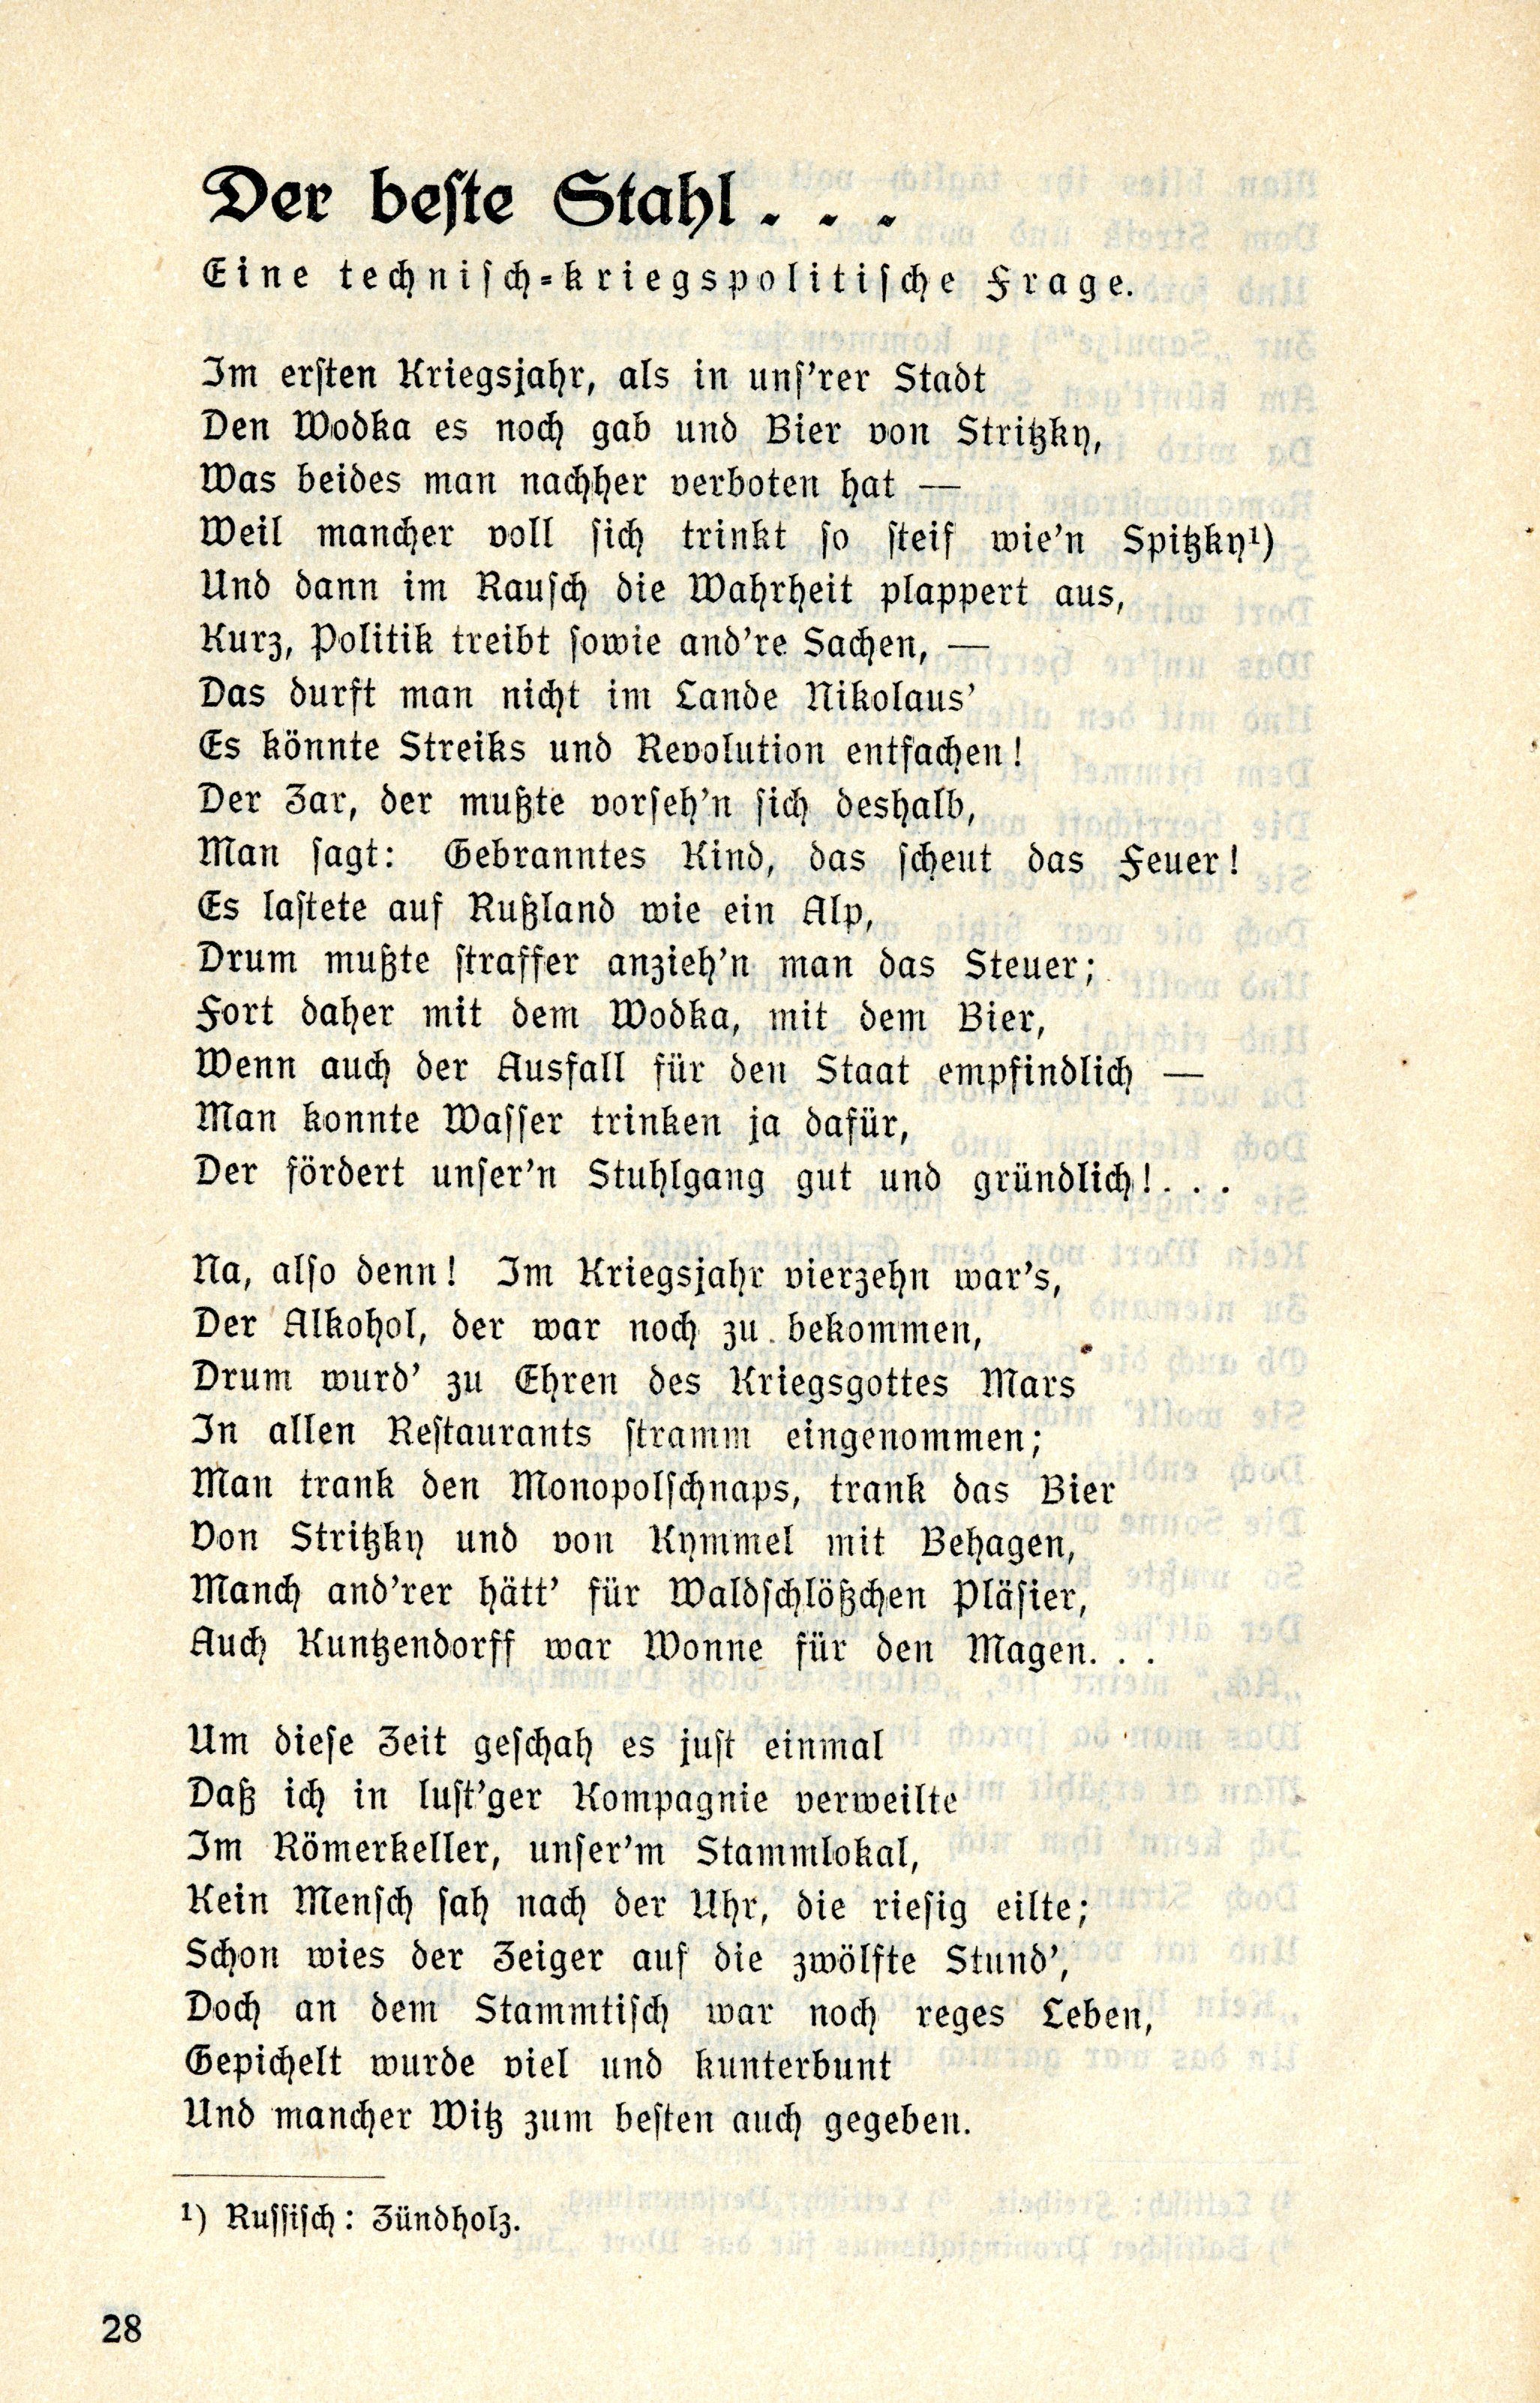 Der Balte im Maulkorb (1917) | 29. (28) Основной текст